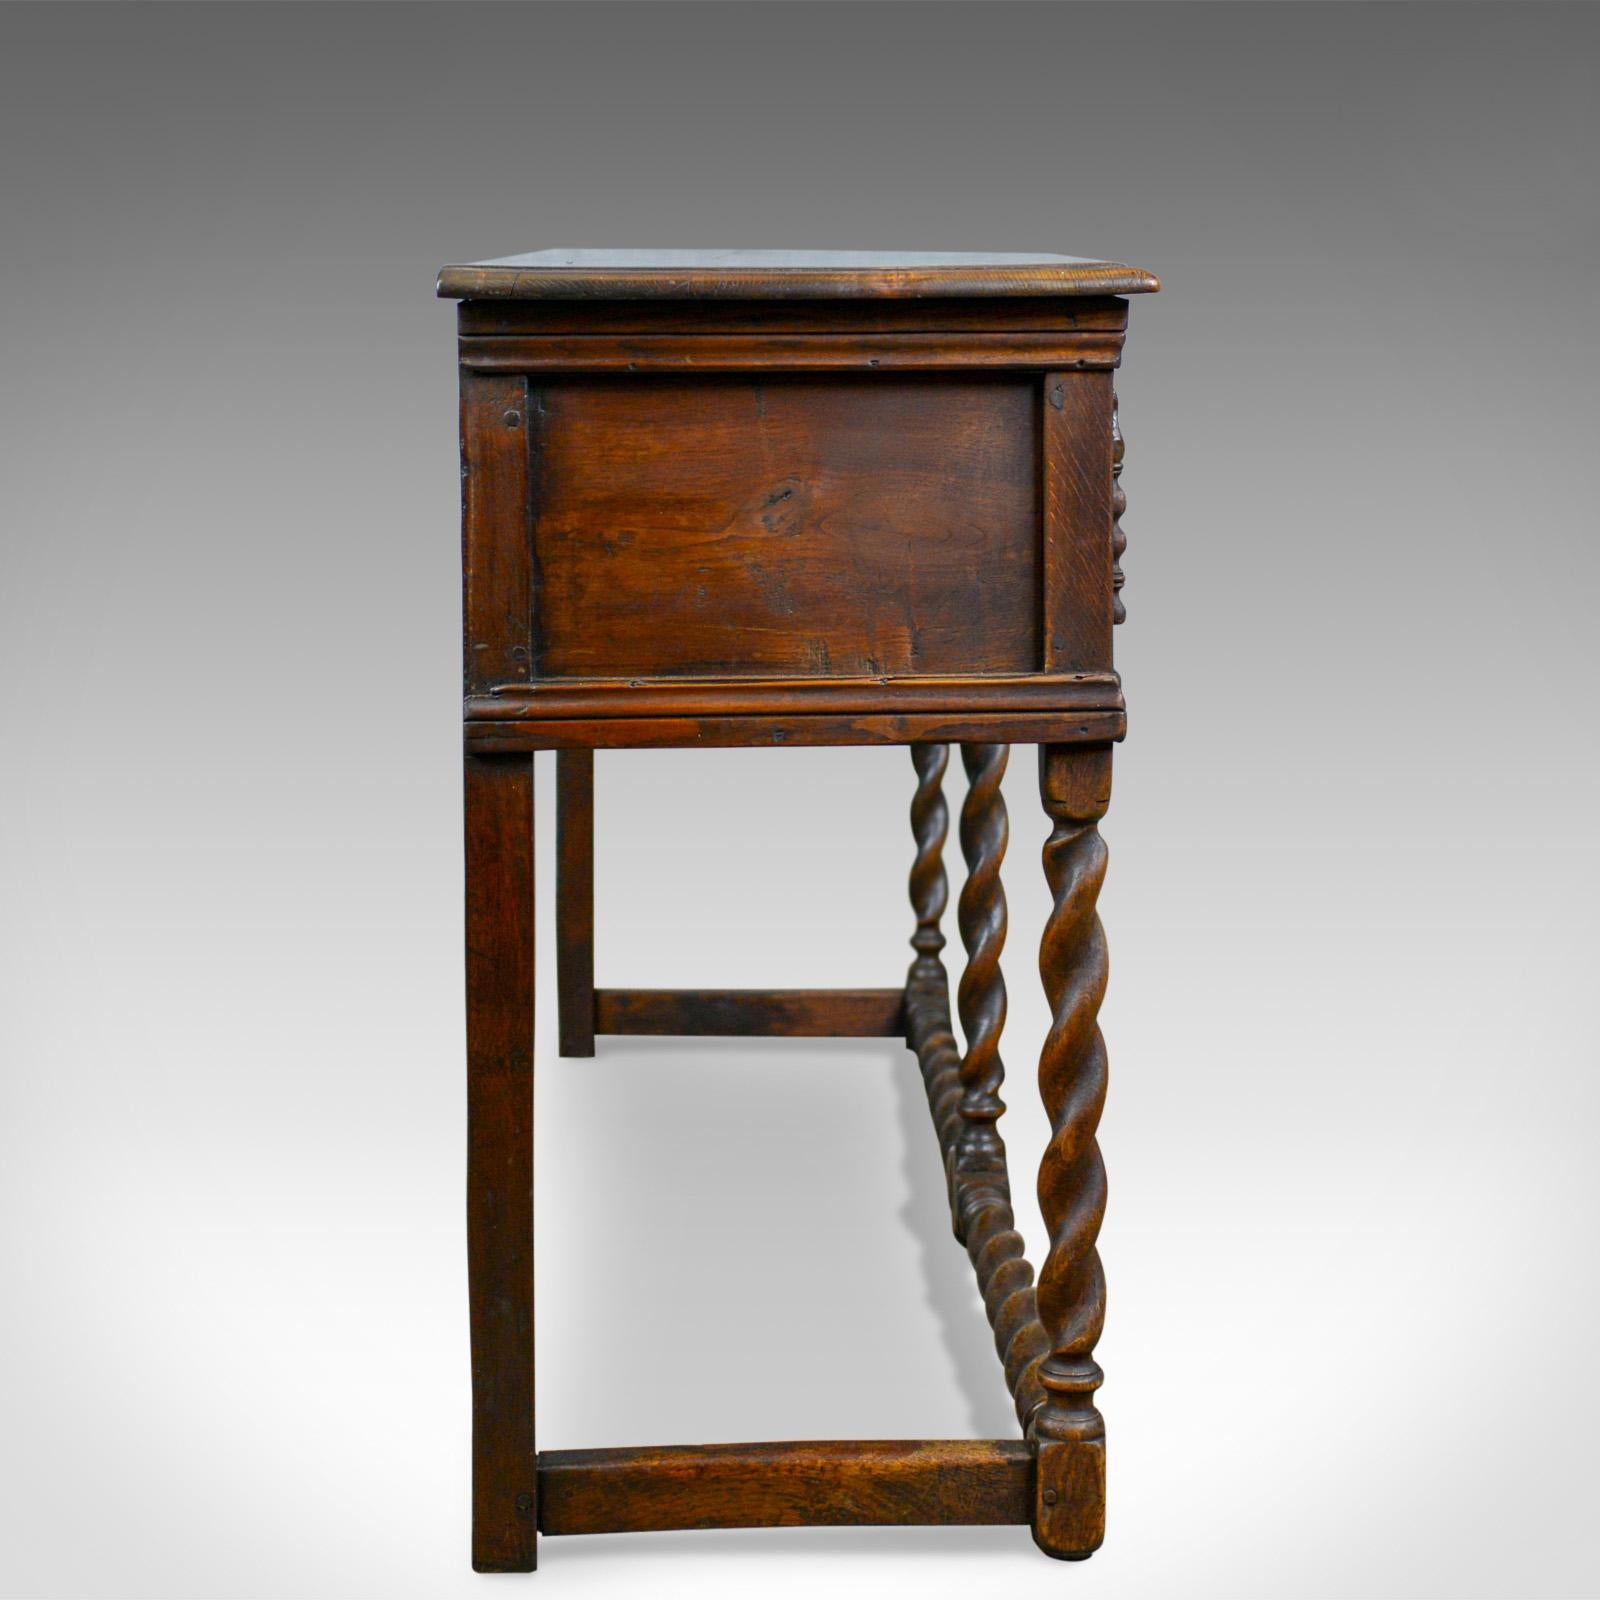 Jacobean Antique Dresser Base, Early 18th Century, English, Oak, Sideboard, circa 1700